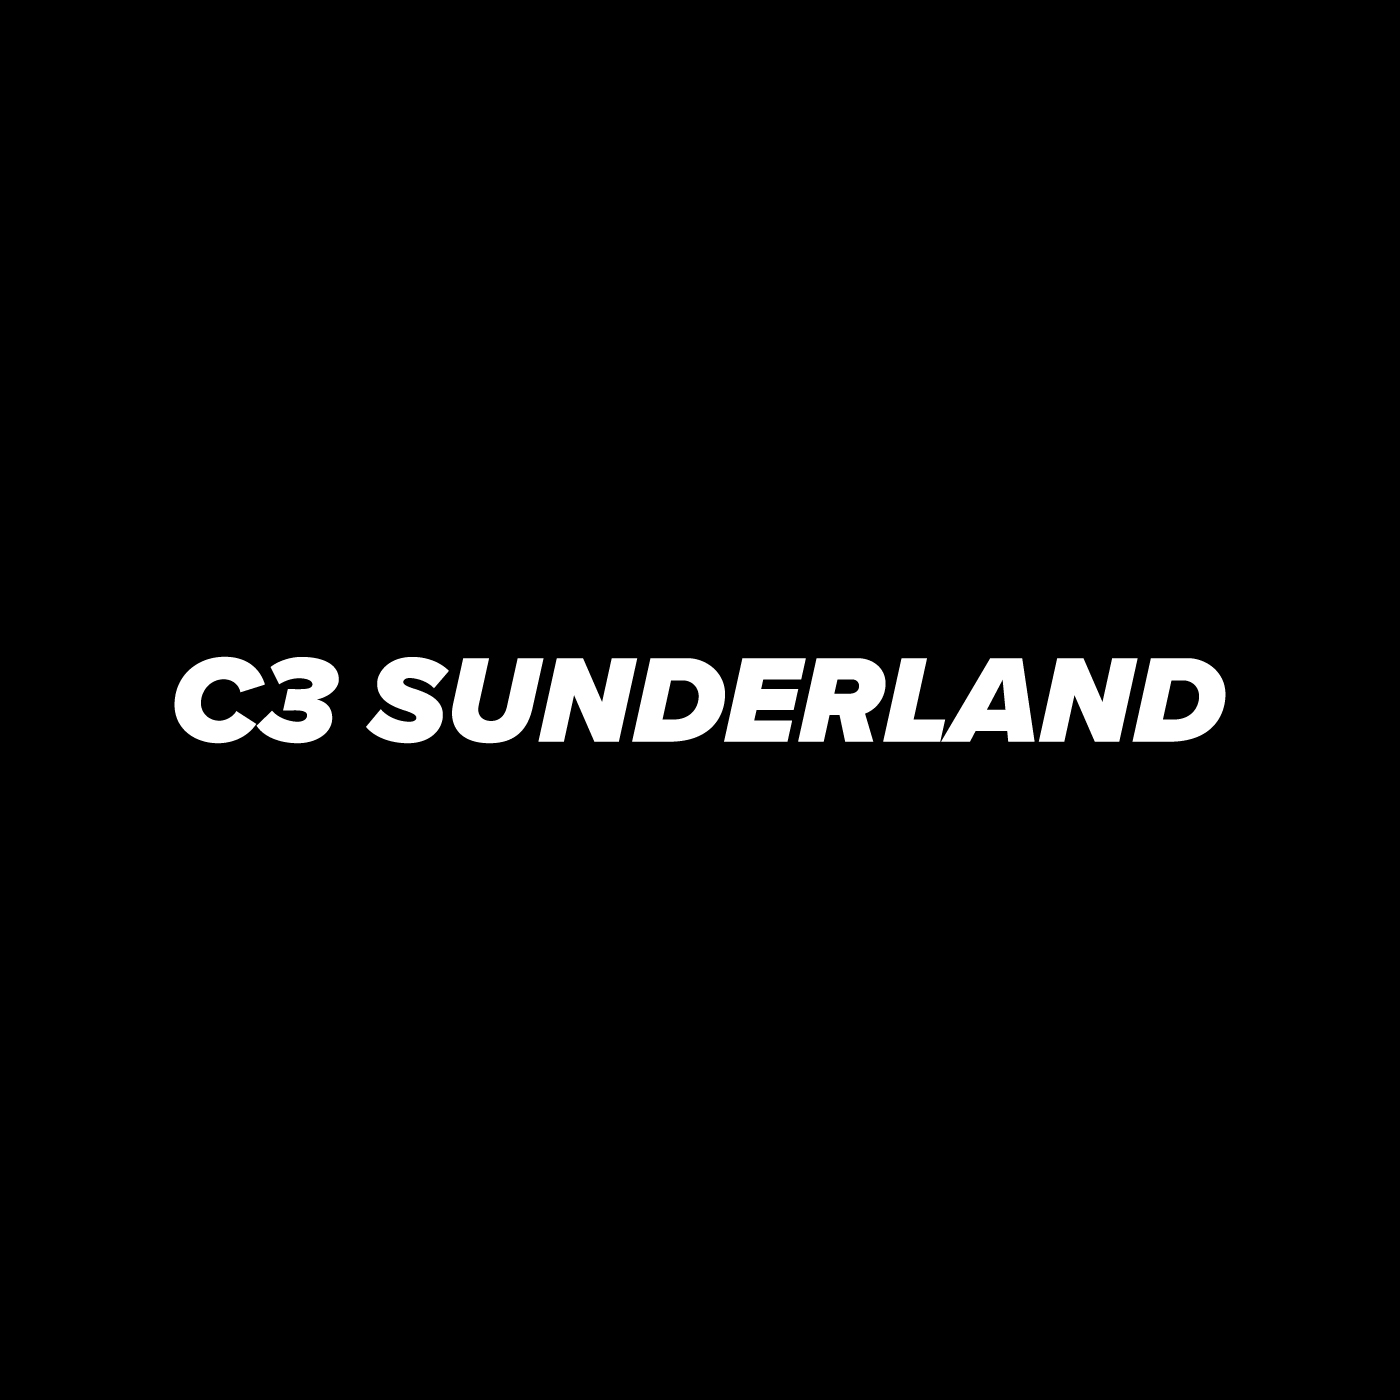 C3 Sunderland